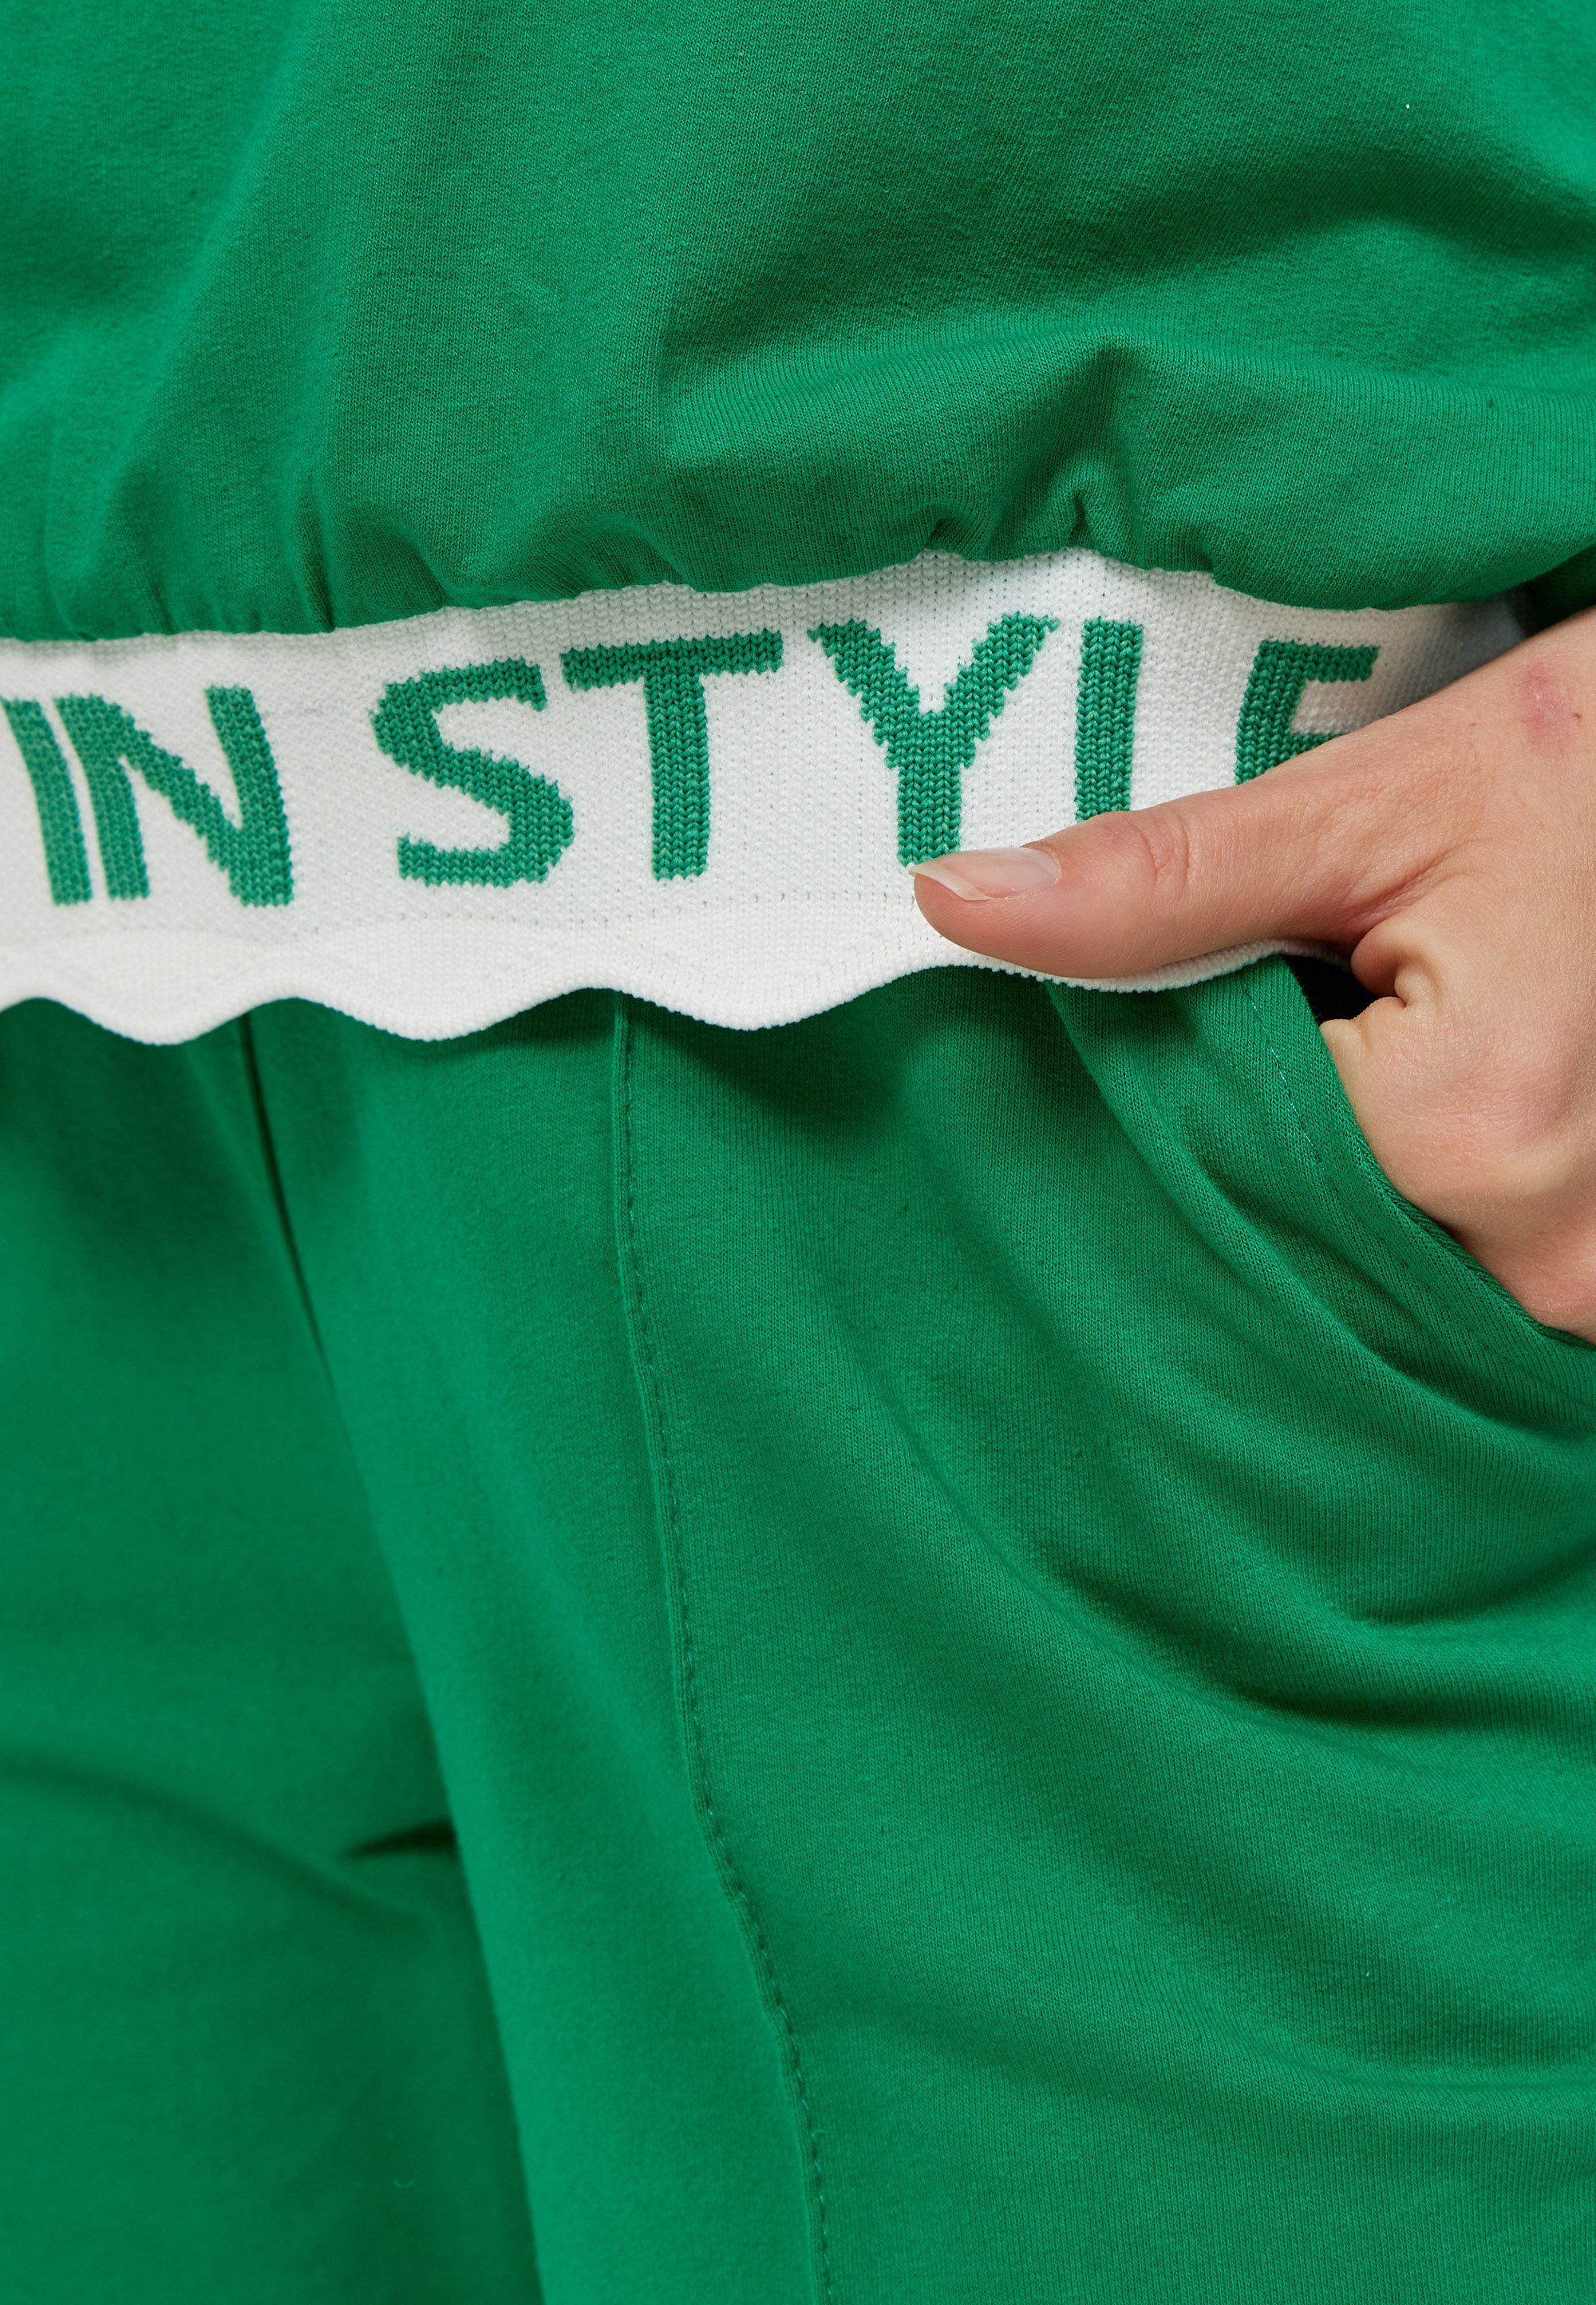 Decay stylishem mit grün Schriftzug T-Shirt